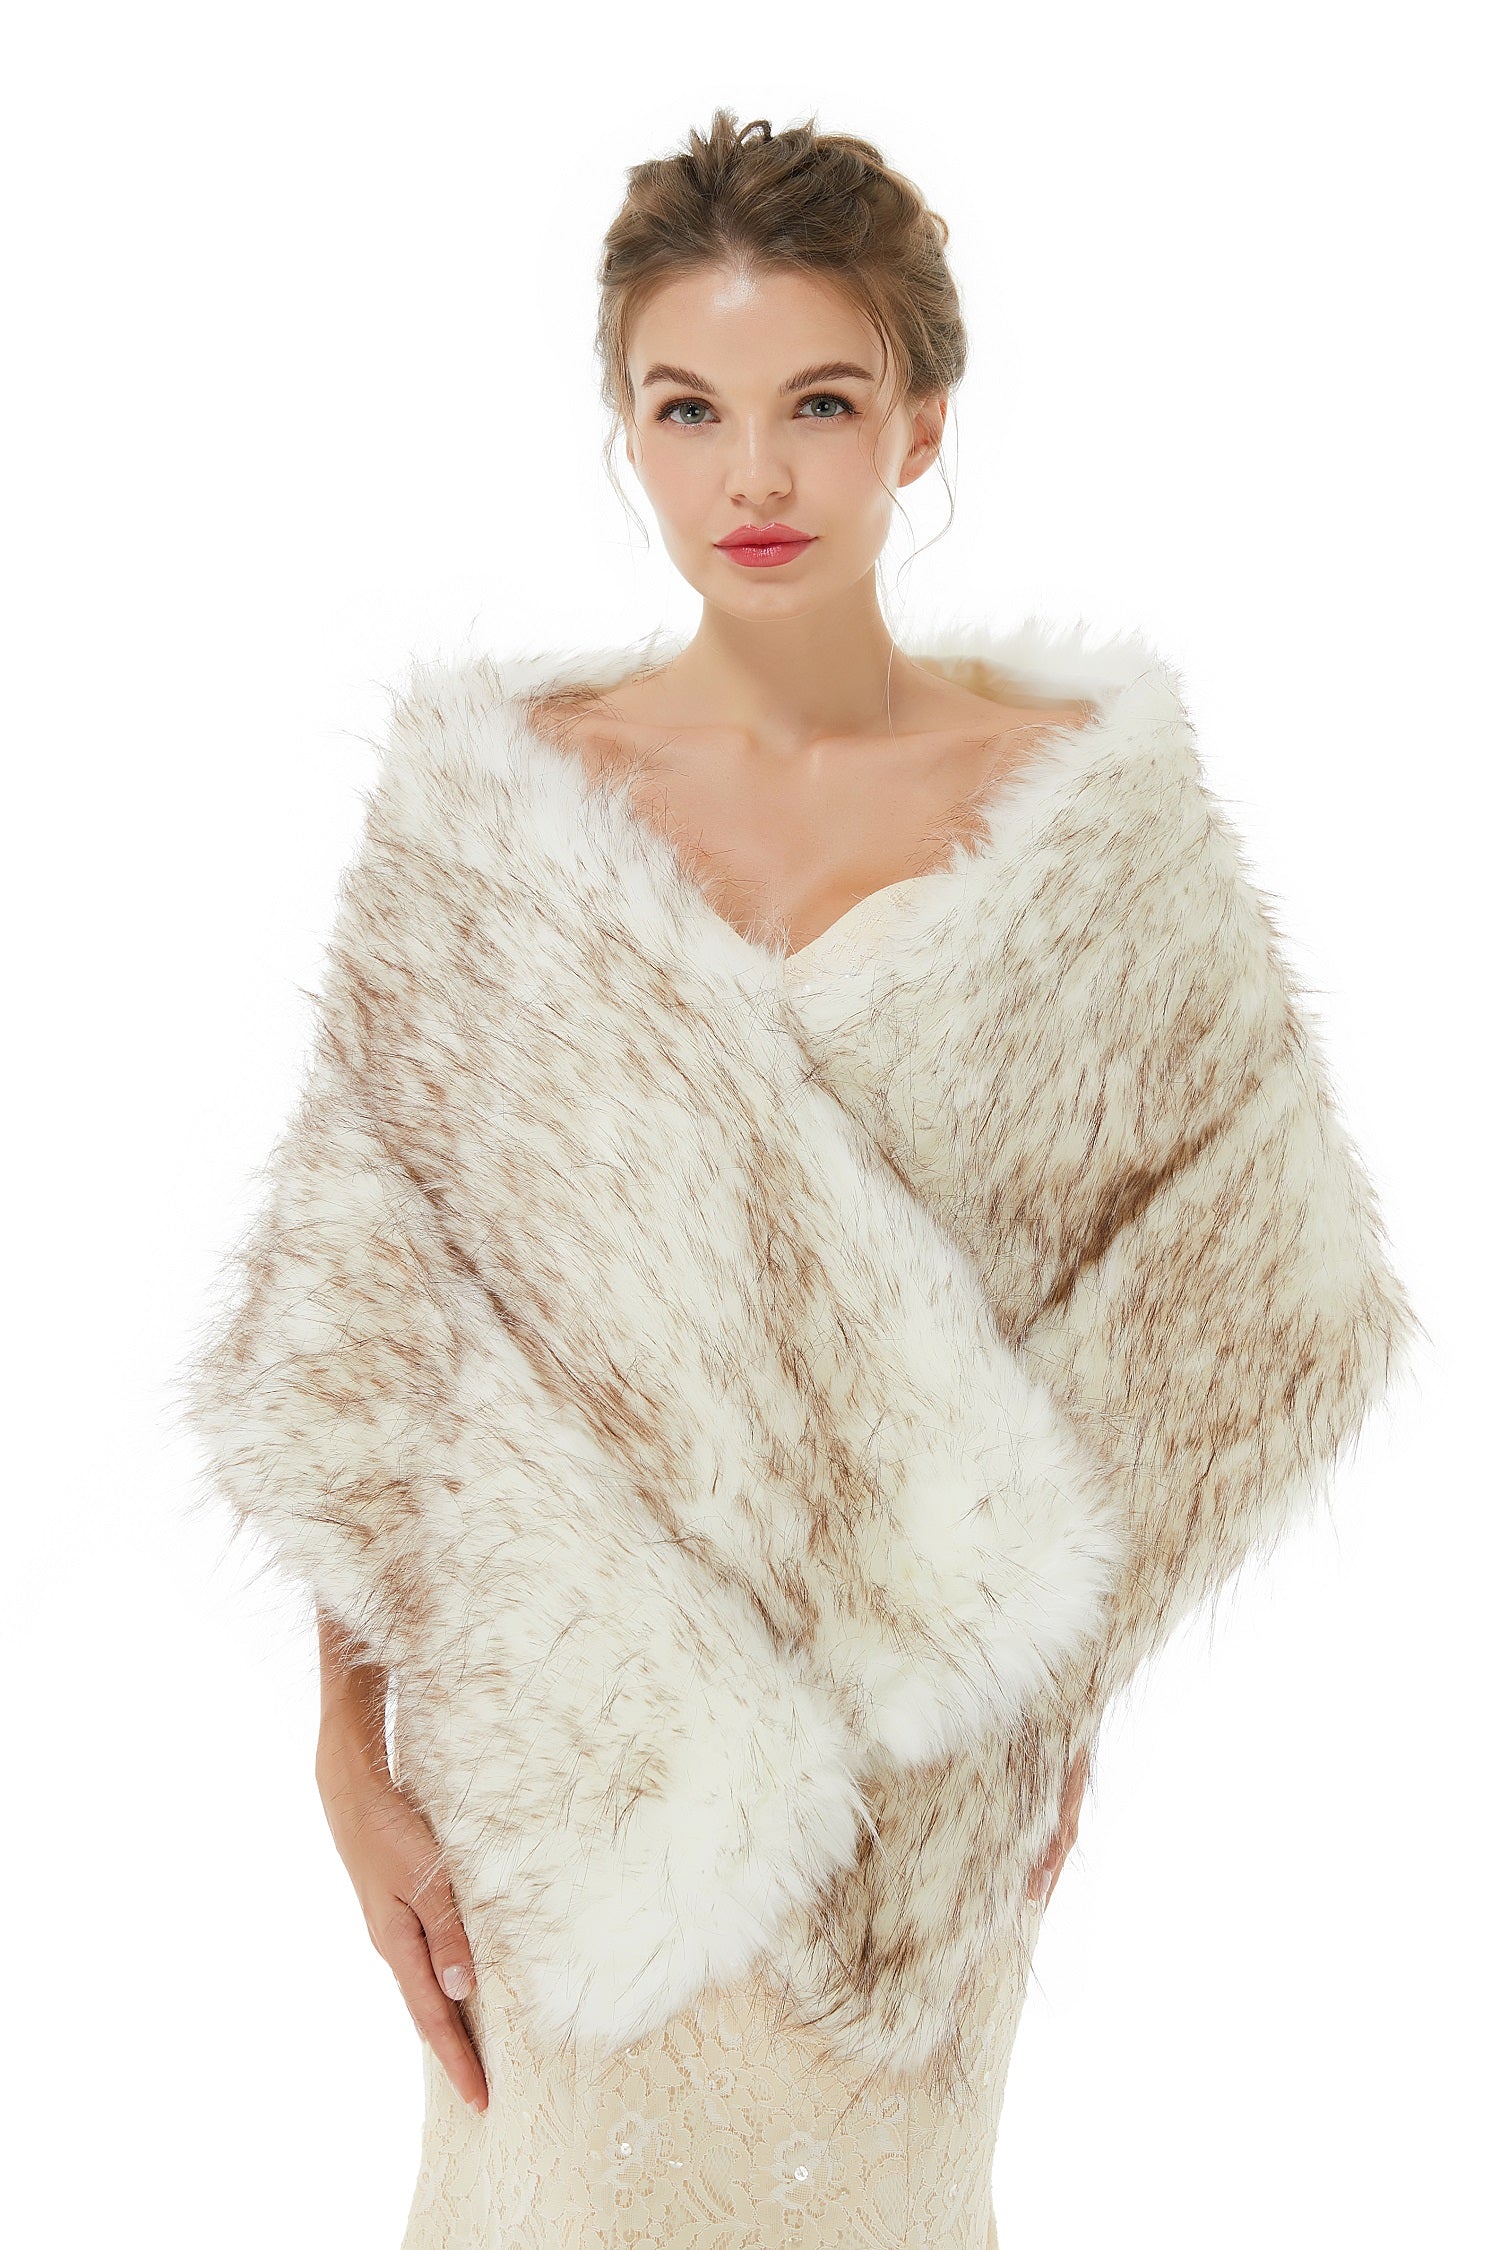 Dresseswow Gentleable Winter Wedding Wraps Faux Fur Bridal Shawl On Sale